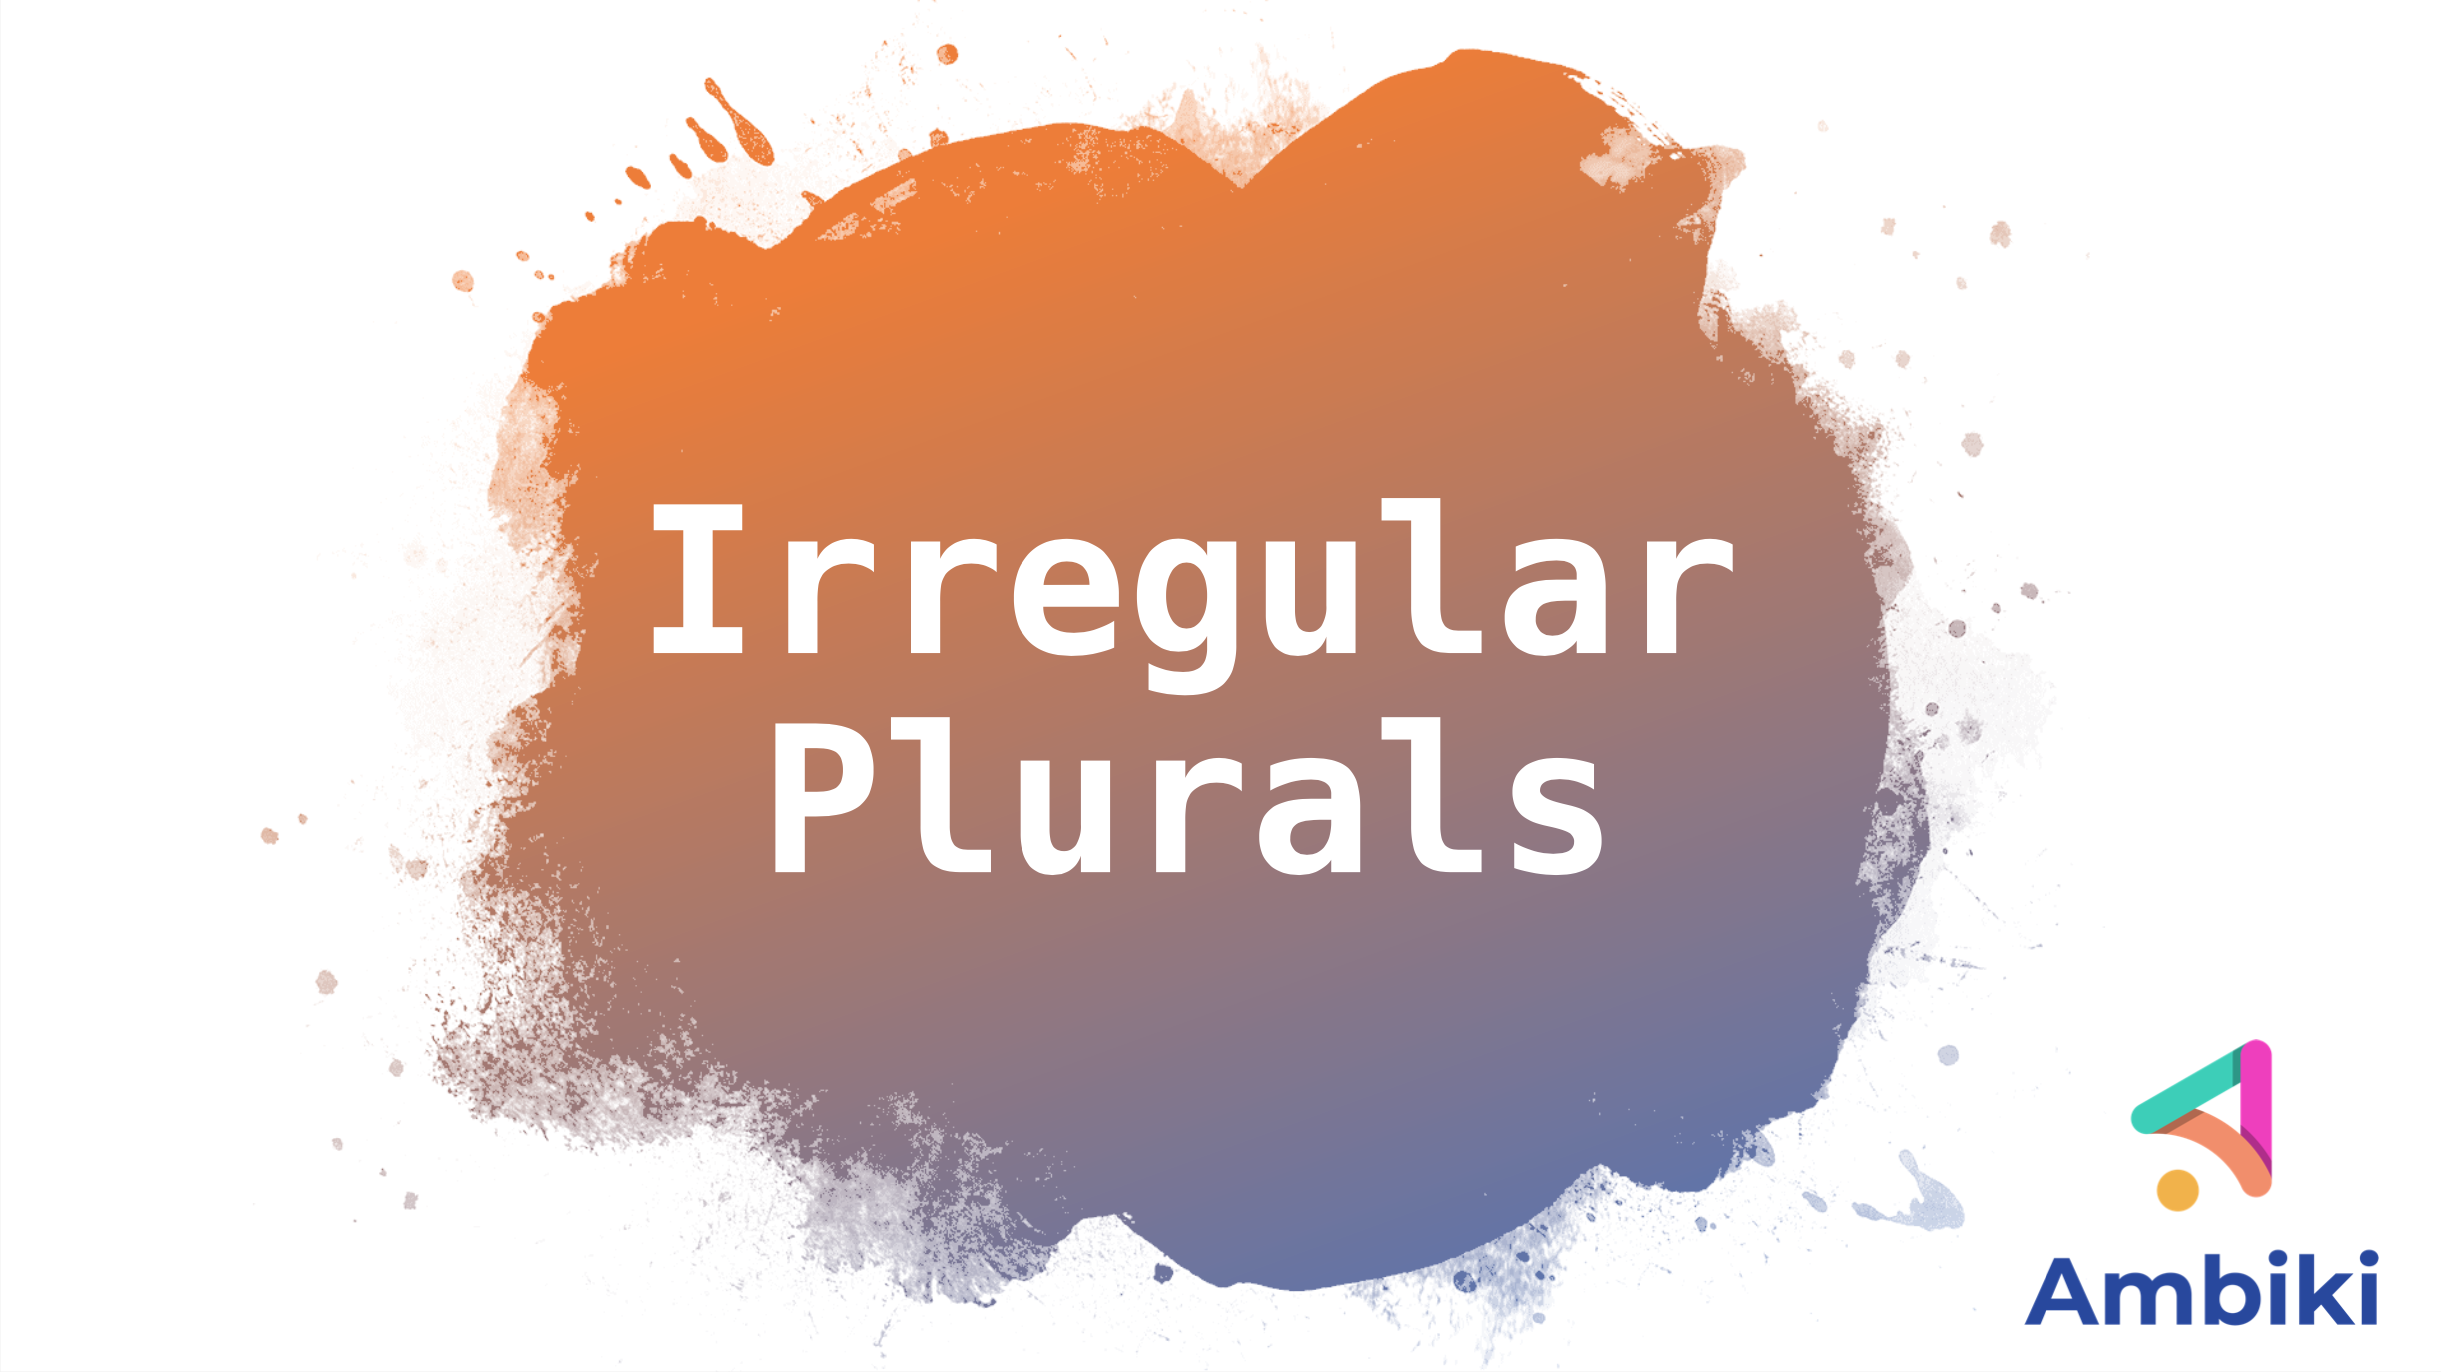 Irregular Plurals image